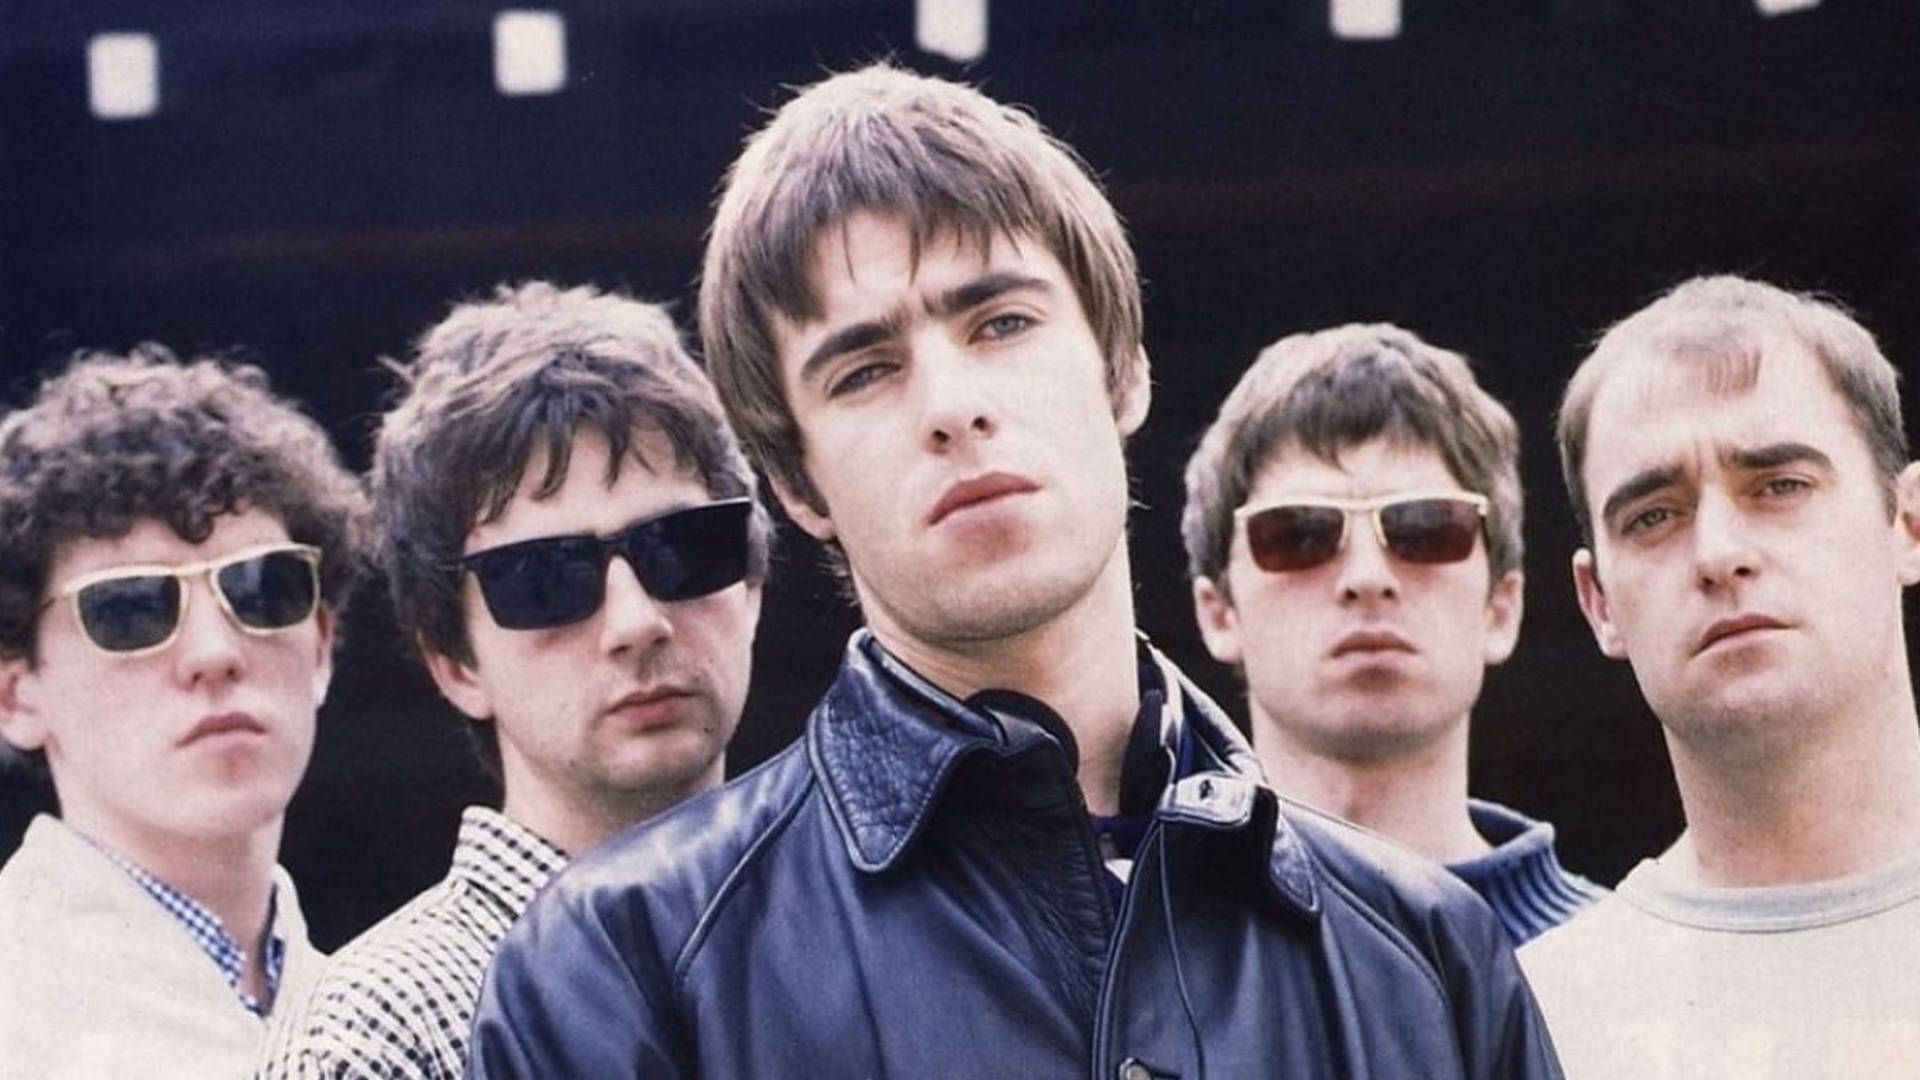 Download Oasis Rock Band Wallpaper 